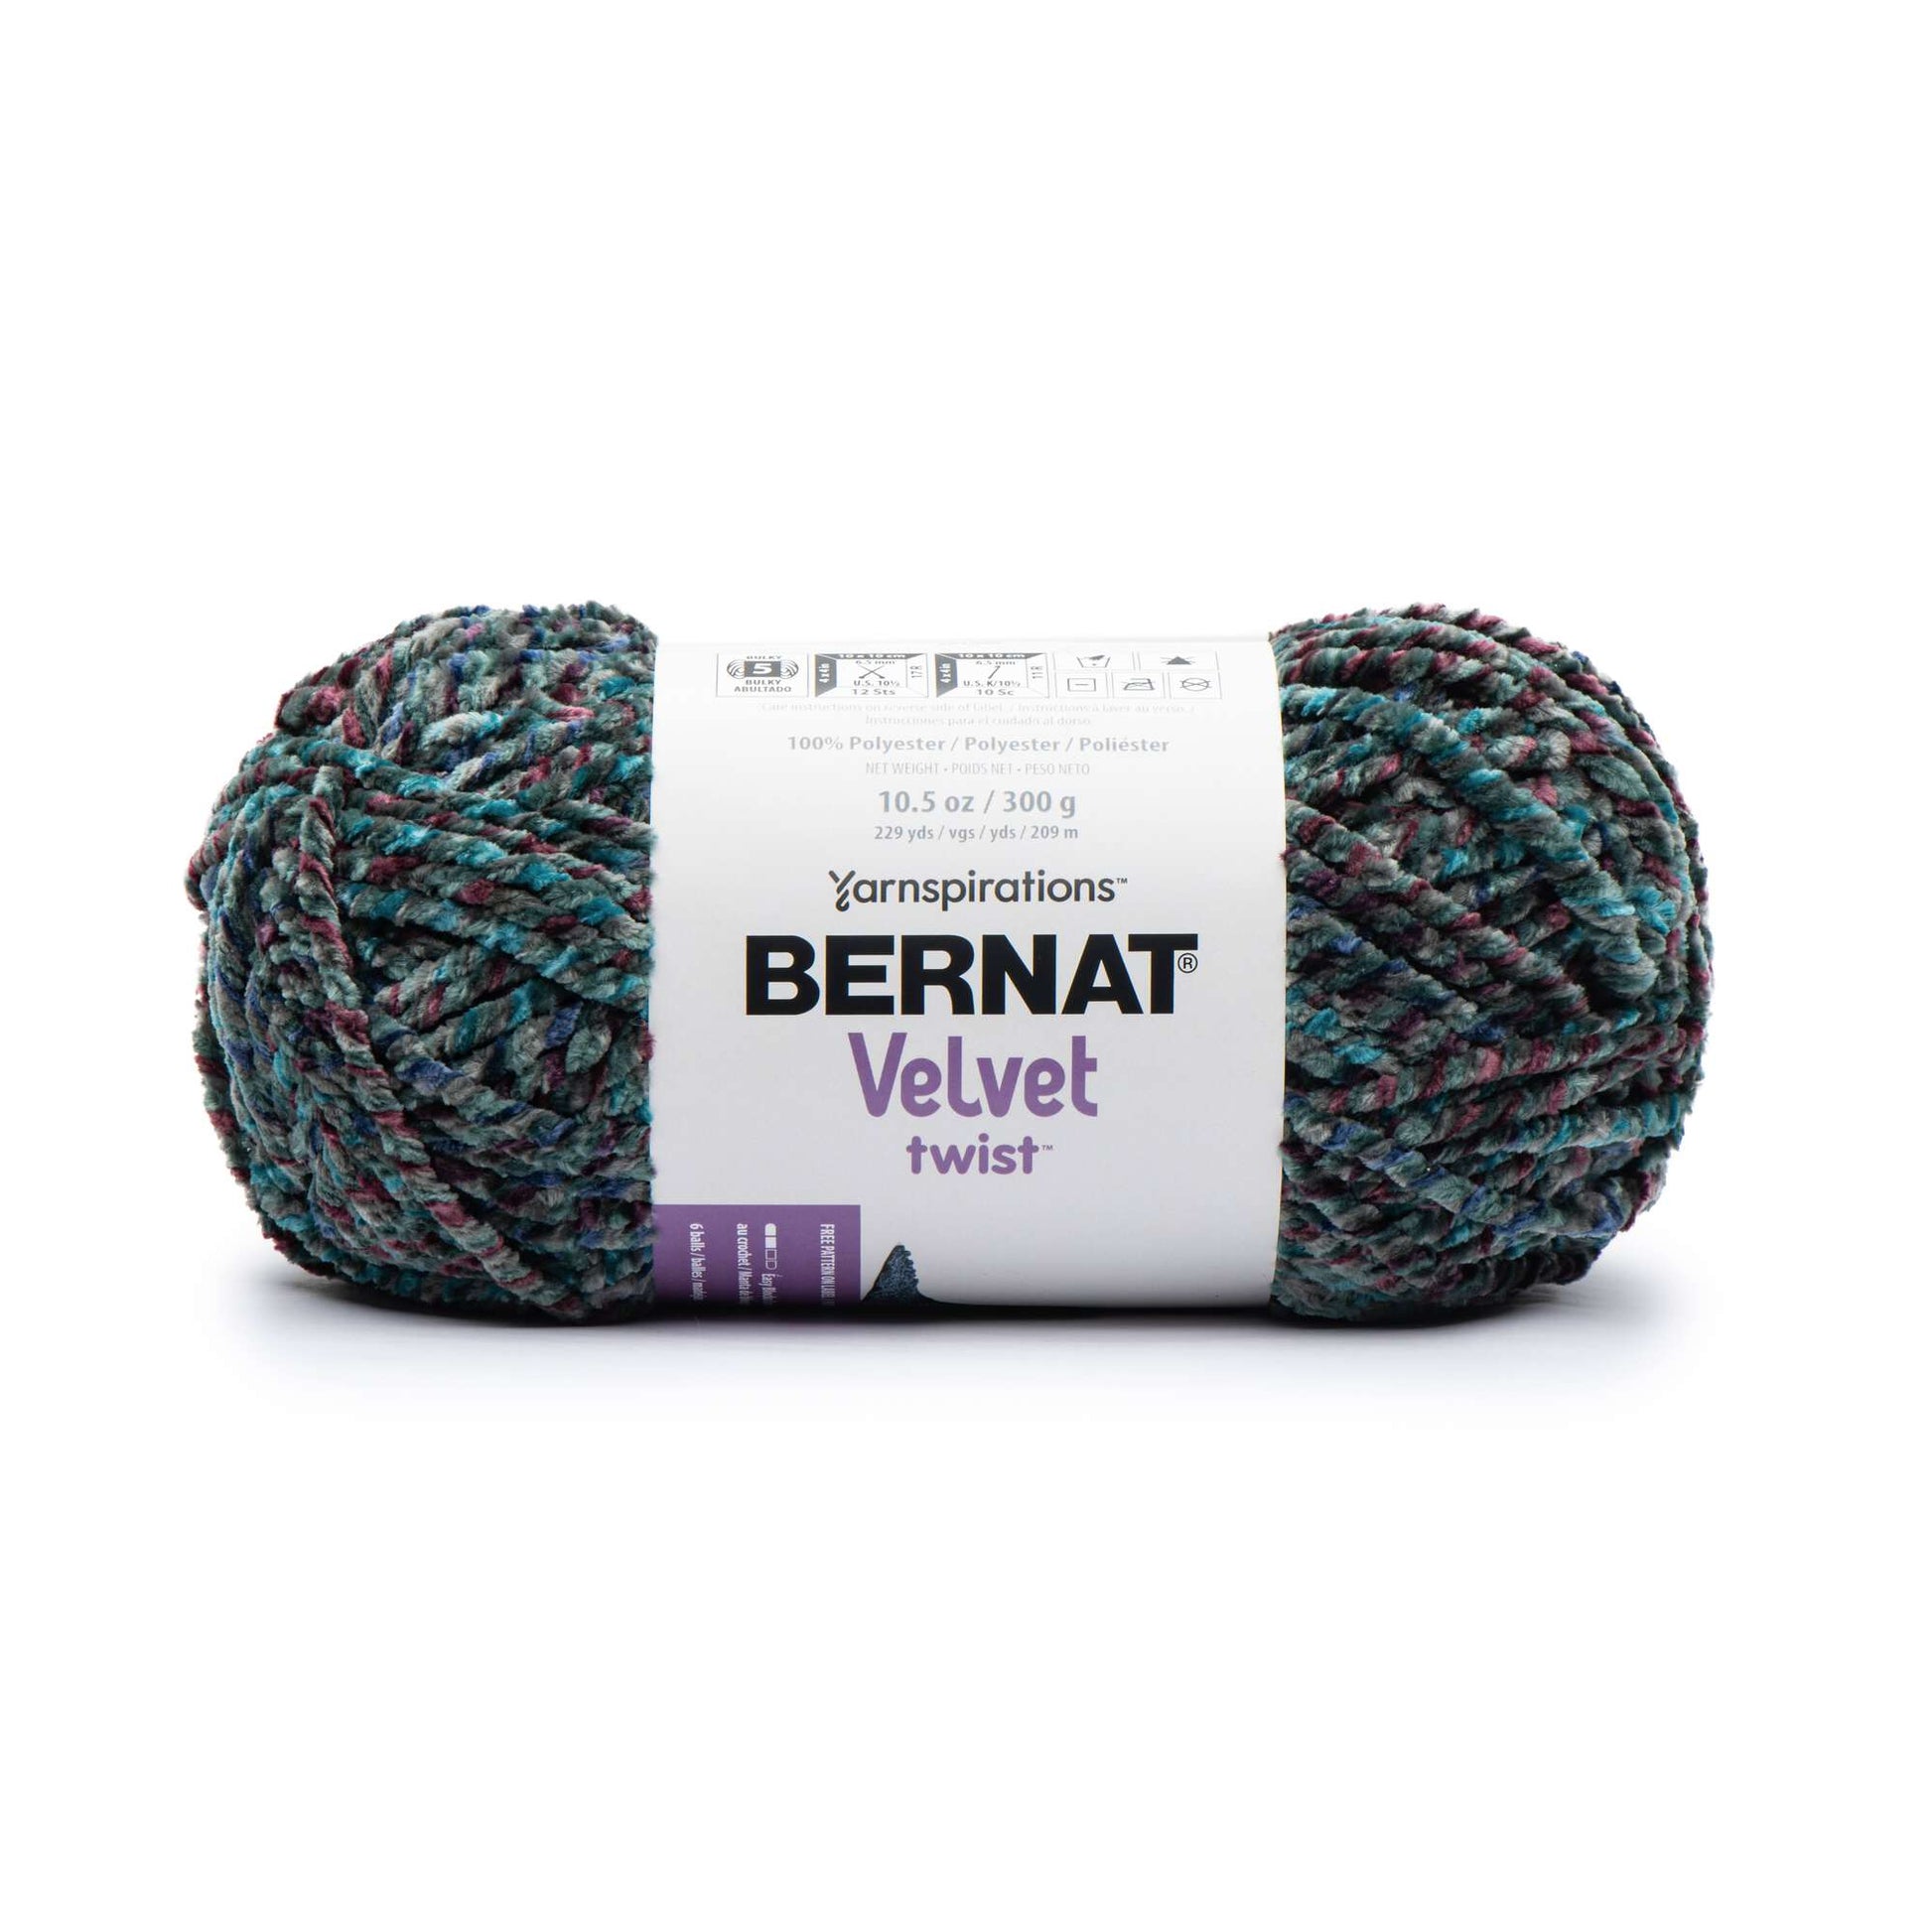 Archie the Donkey Crochet Pattern using Bernat Blanket Yarn – My Fingers Fly